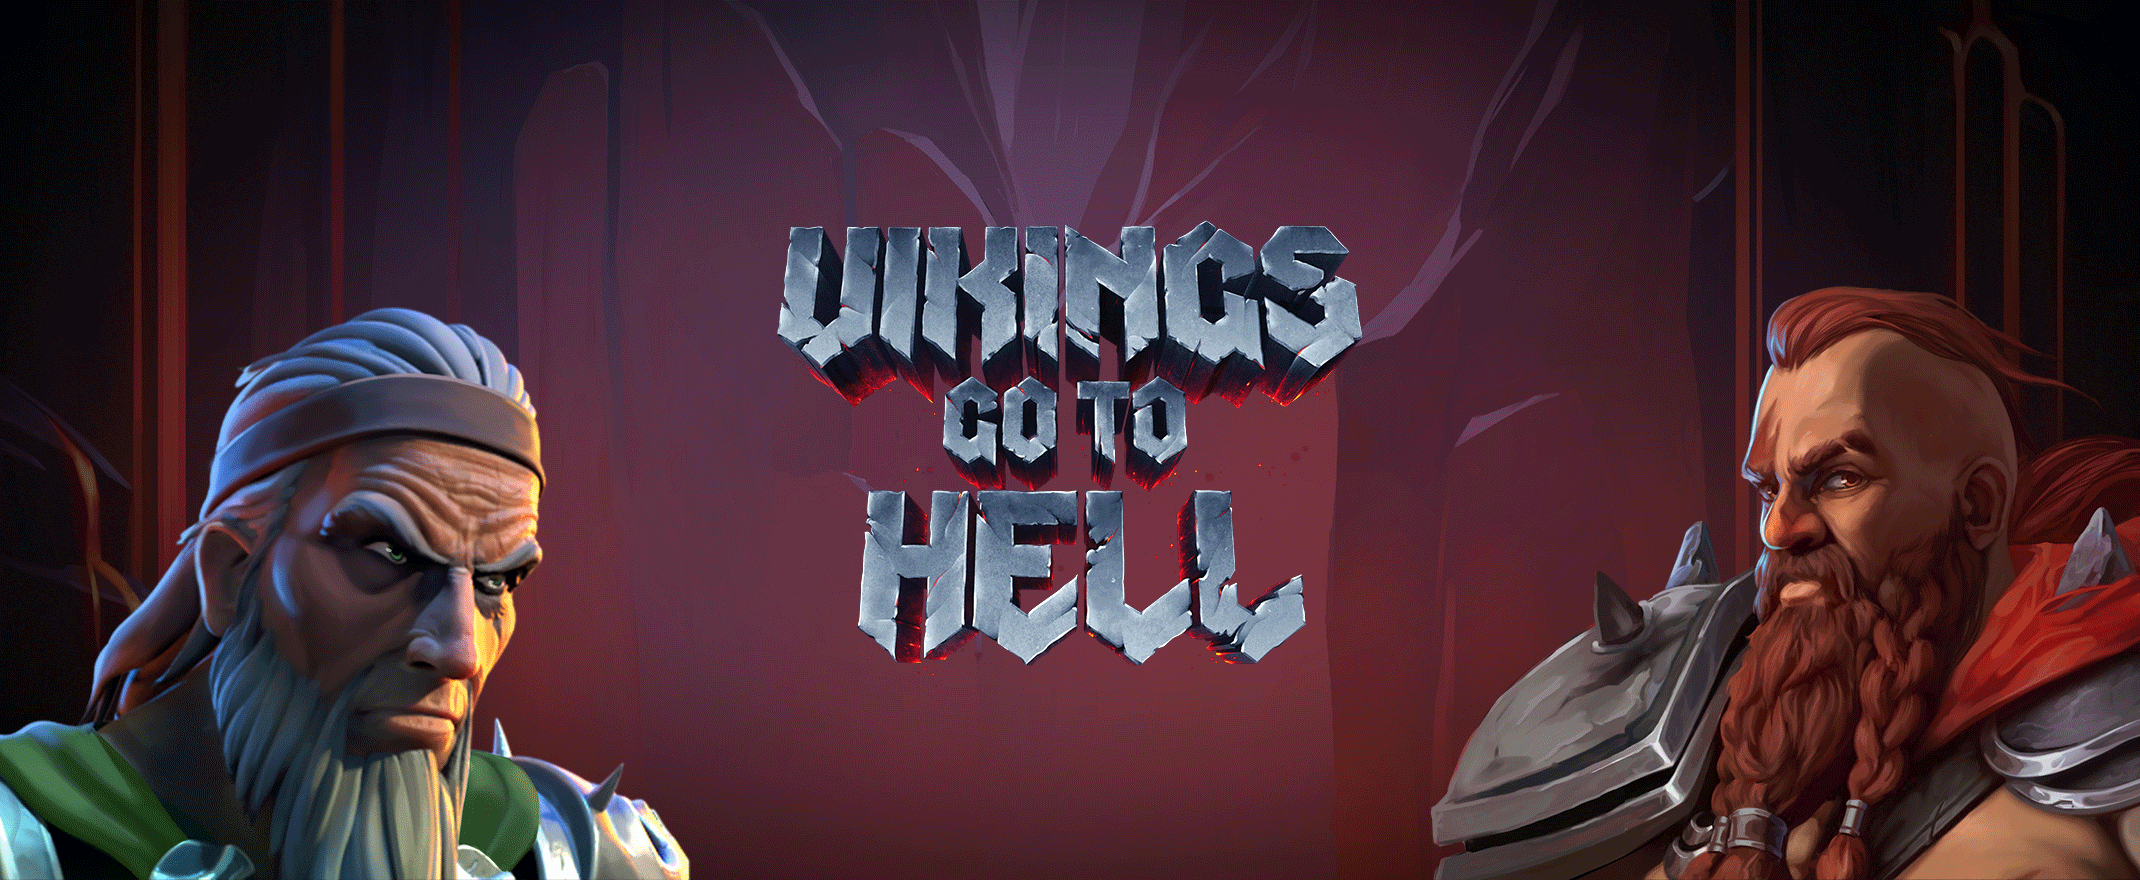 Vikings Go to Hell - Yggdrasil